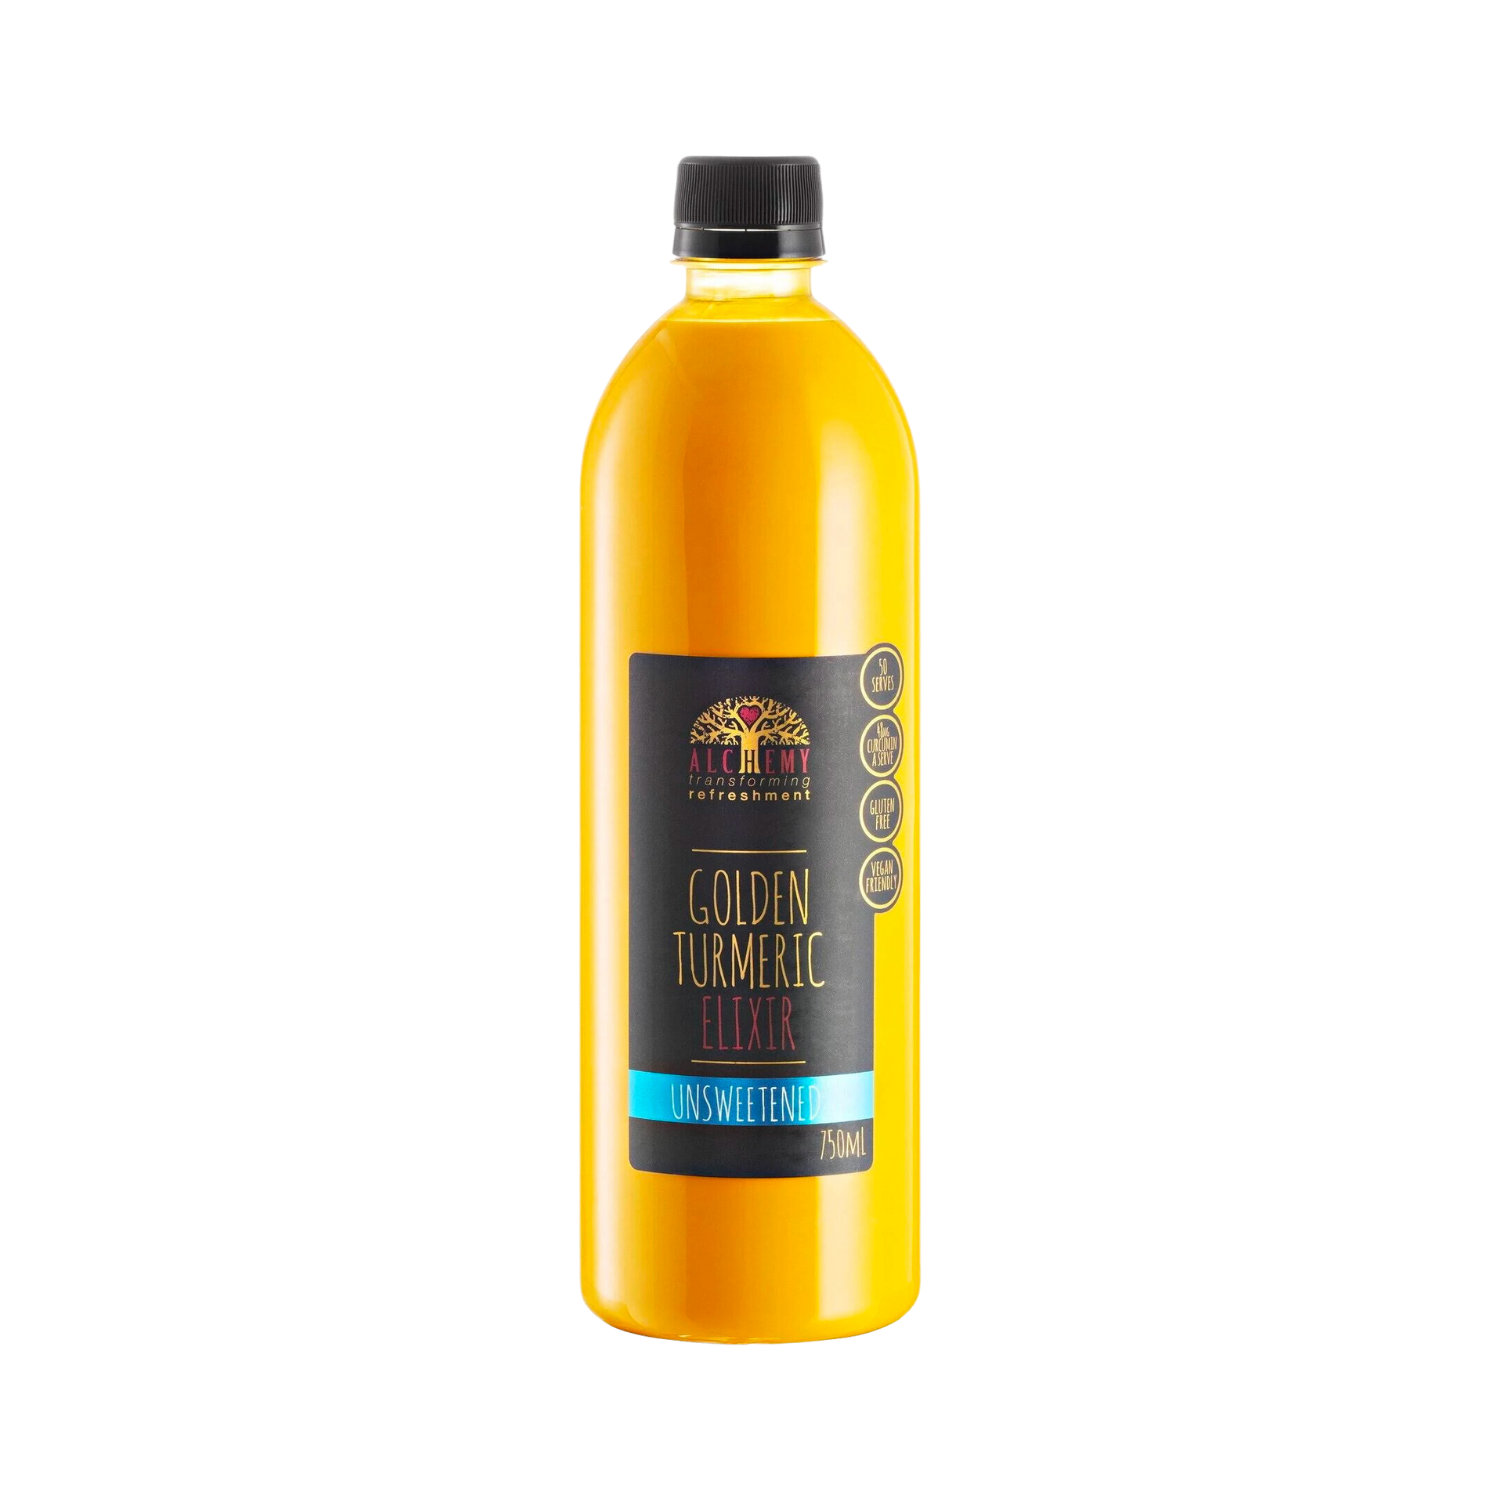 Golden Milk Turmeric Elixir (Unsweetened)